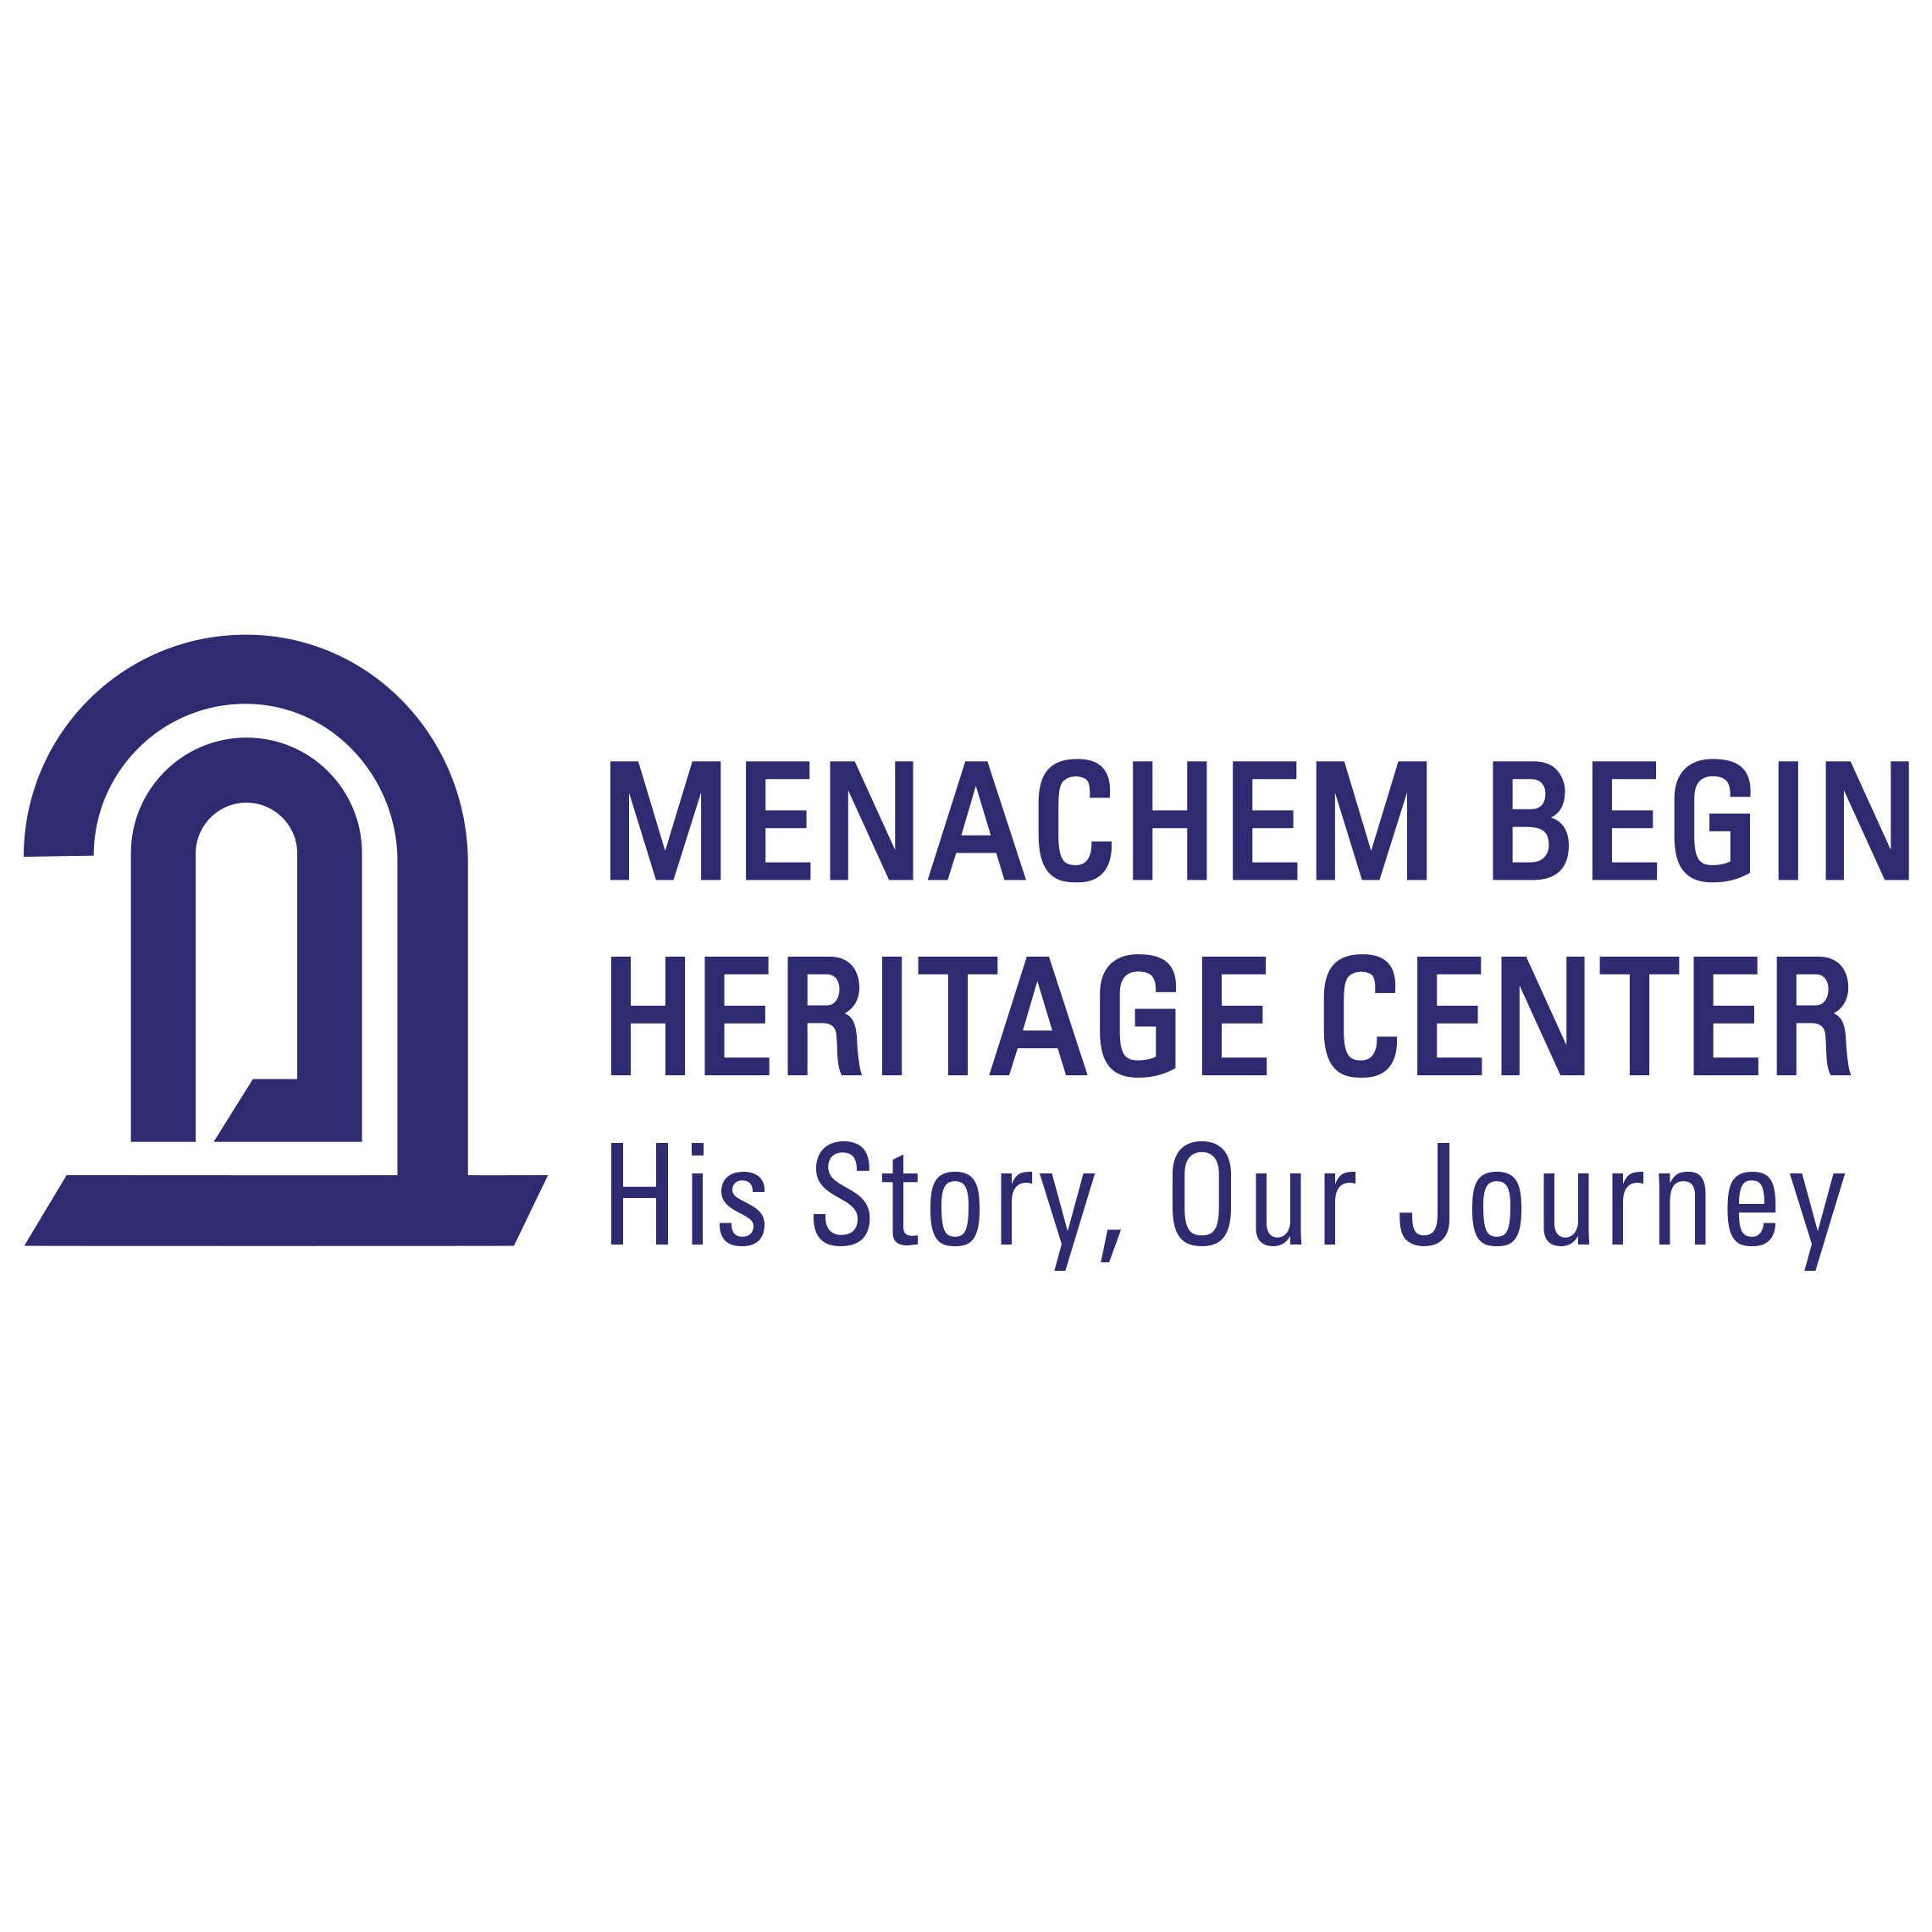 The Menachem Begin Heritage Center